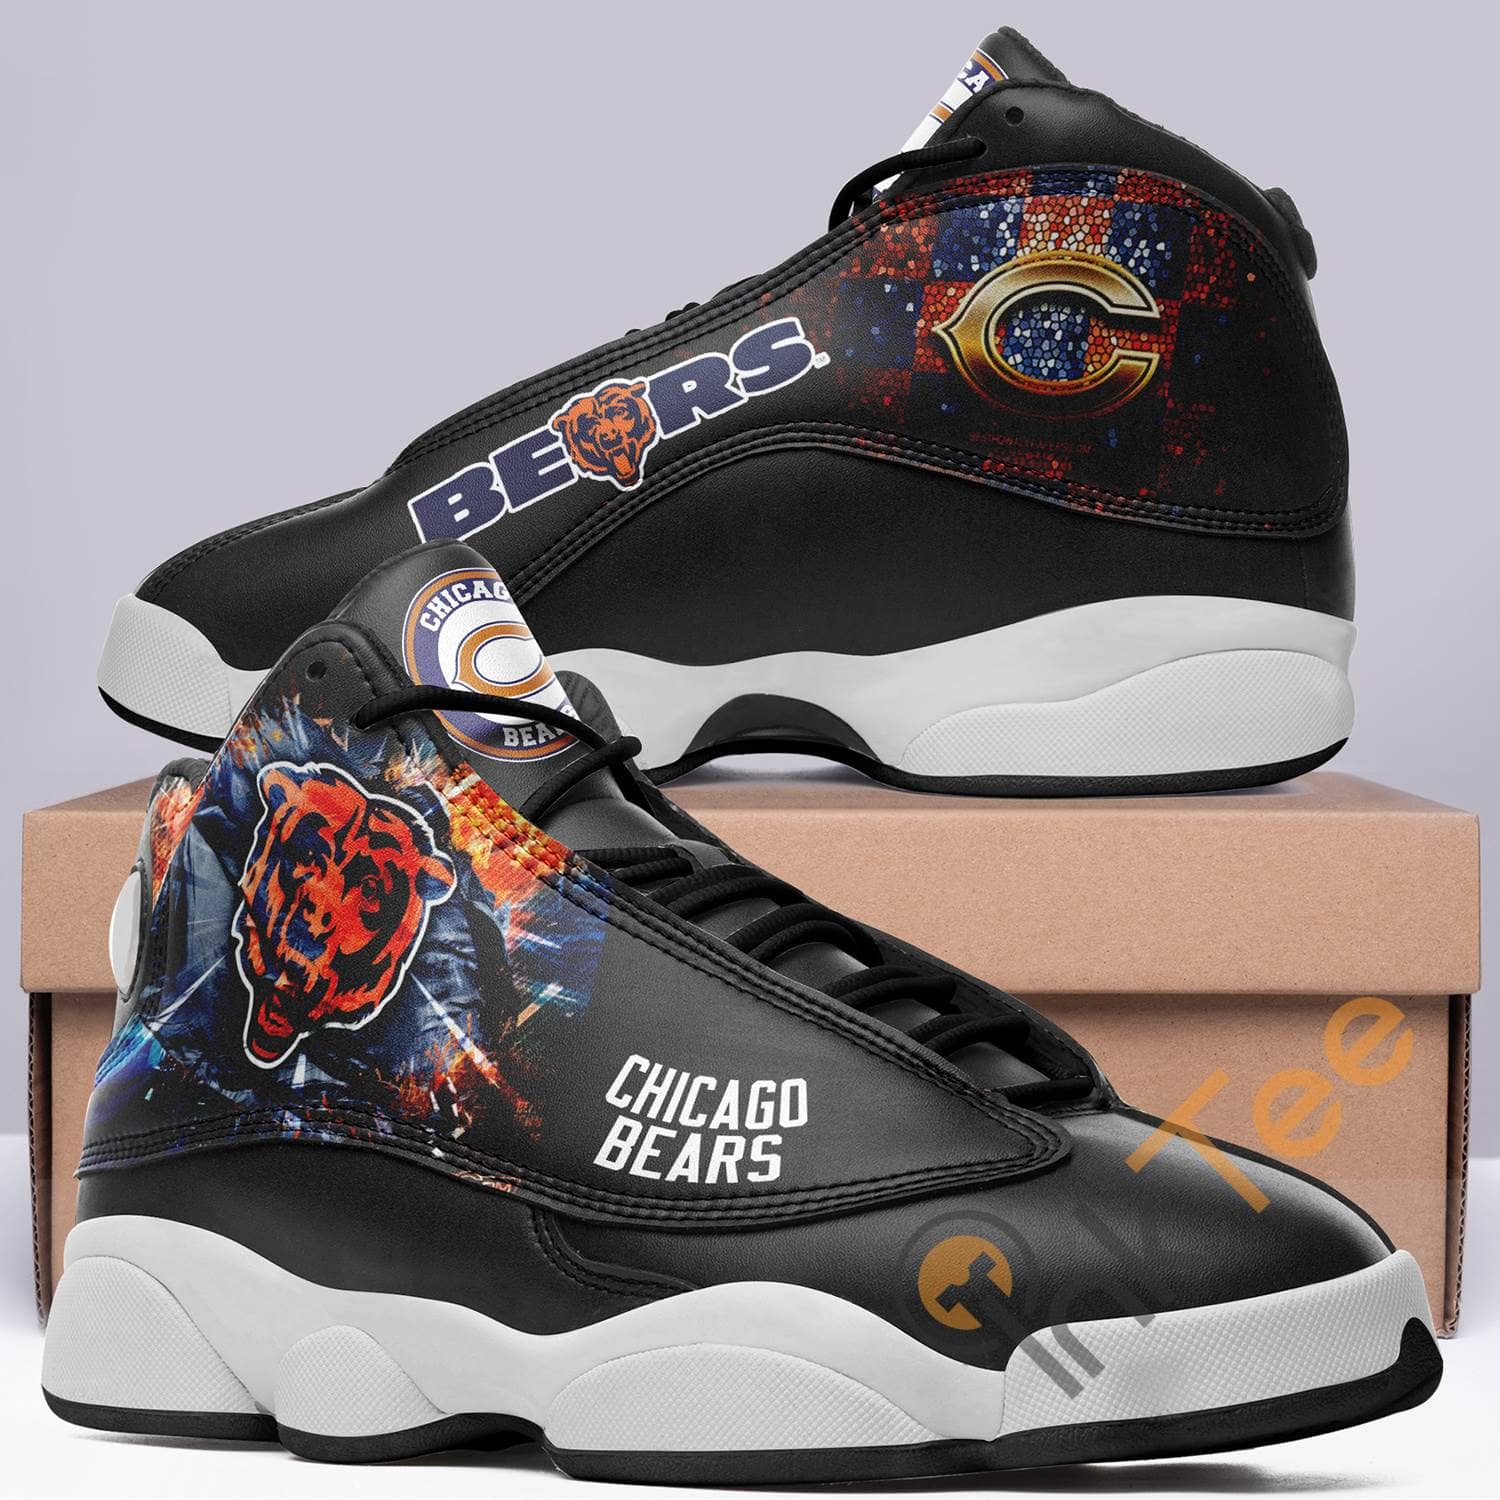 Chicago Bears Nfl Team Aj13 Air Jordan Shoes